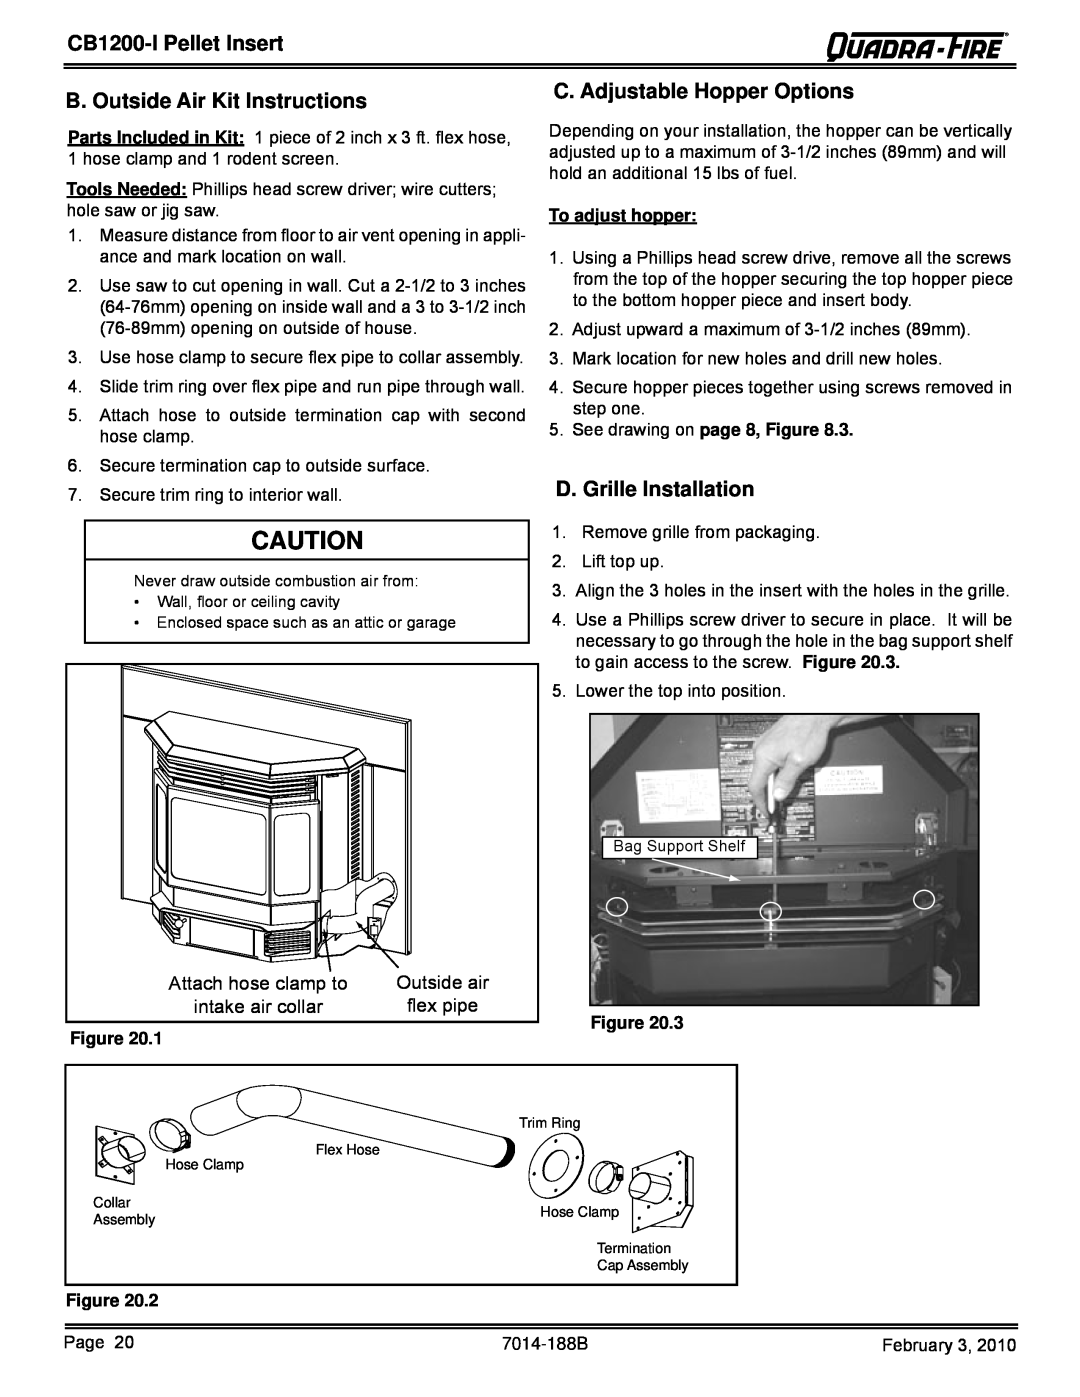 Quadra-Fire CB1200I B. Outside Air Kit Instructions, C. Adjustable Hopper Options, D.Grille Installation, Outside air 